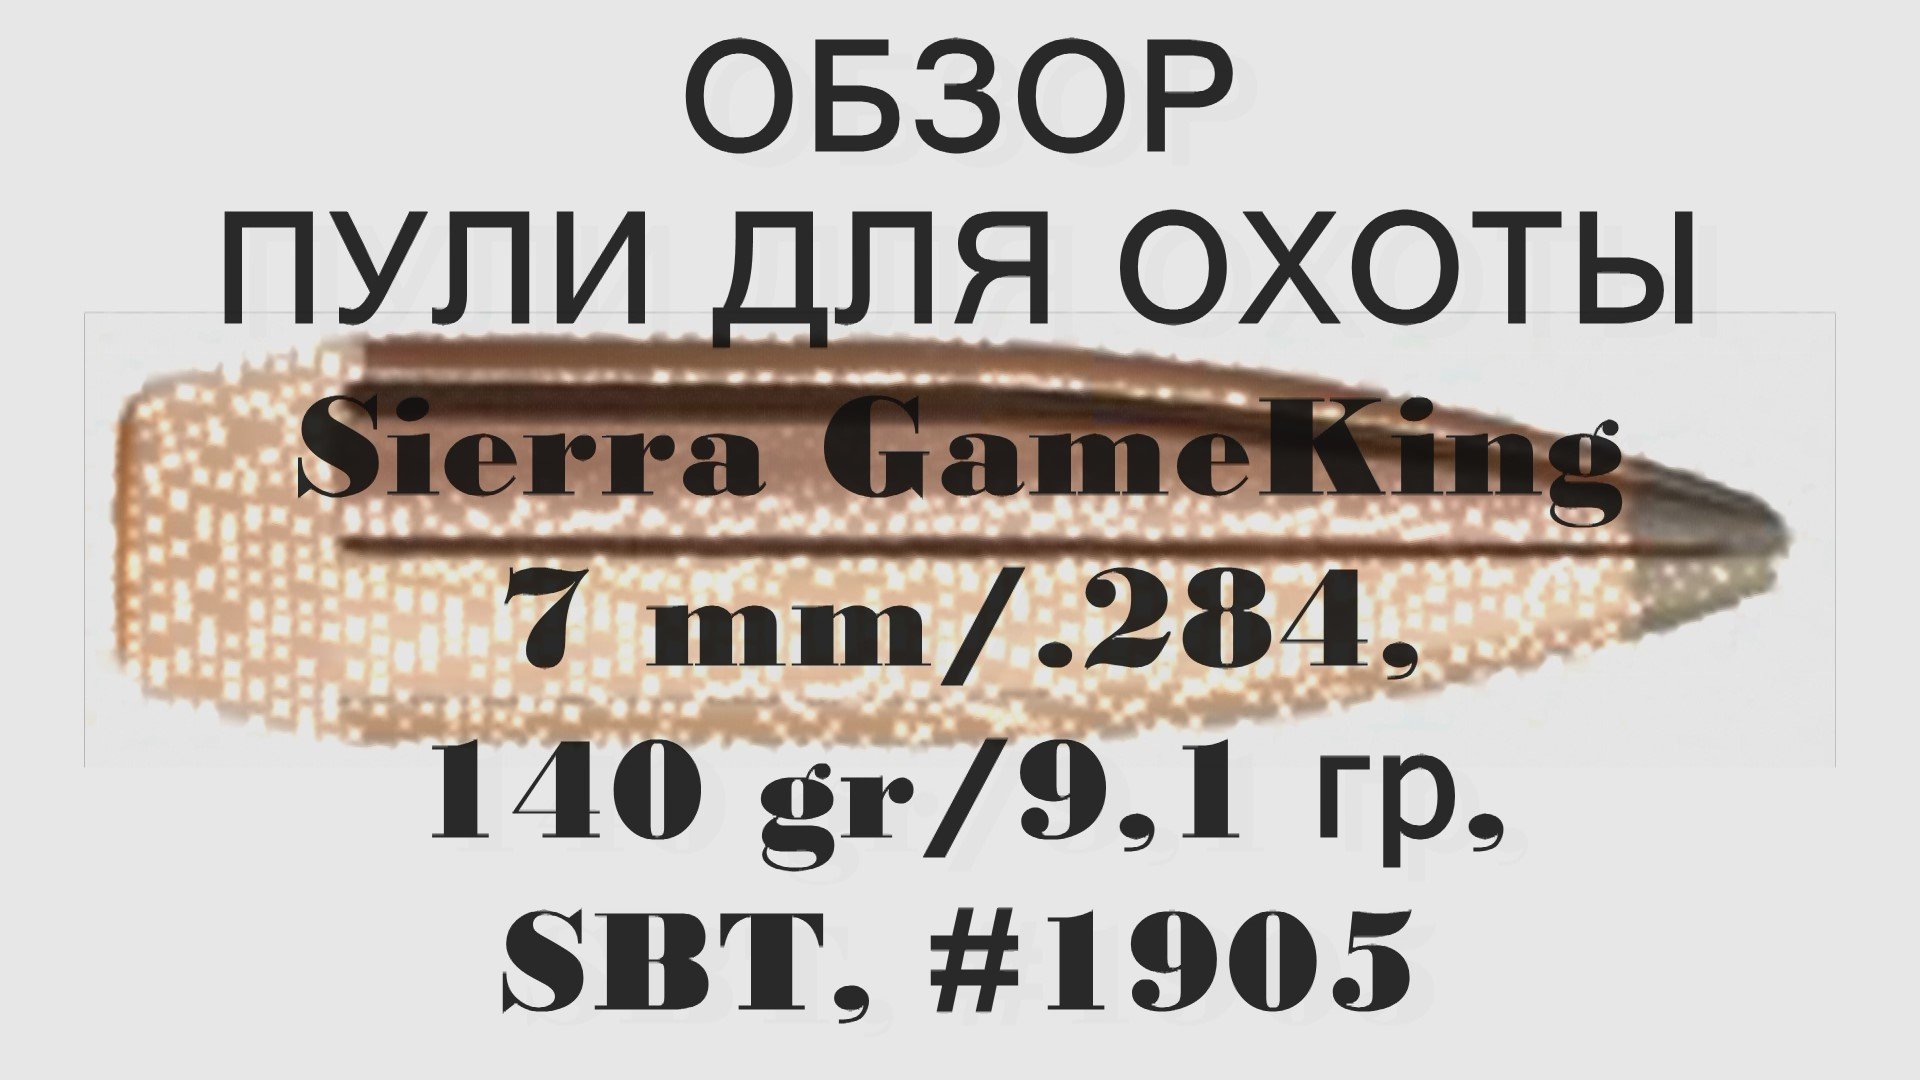 Sierra GameKing 7mm/.284 140gr/9,1грамм SBT #1905 ВС-0,418